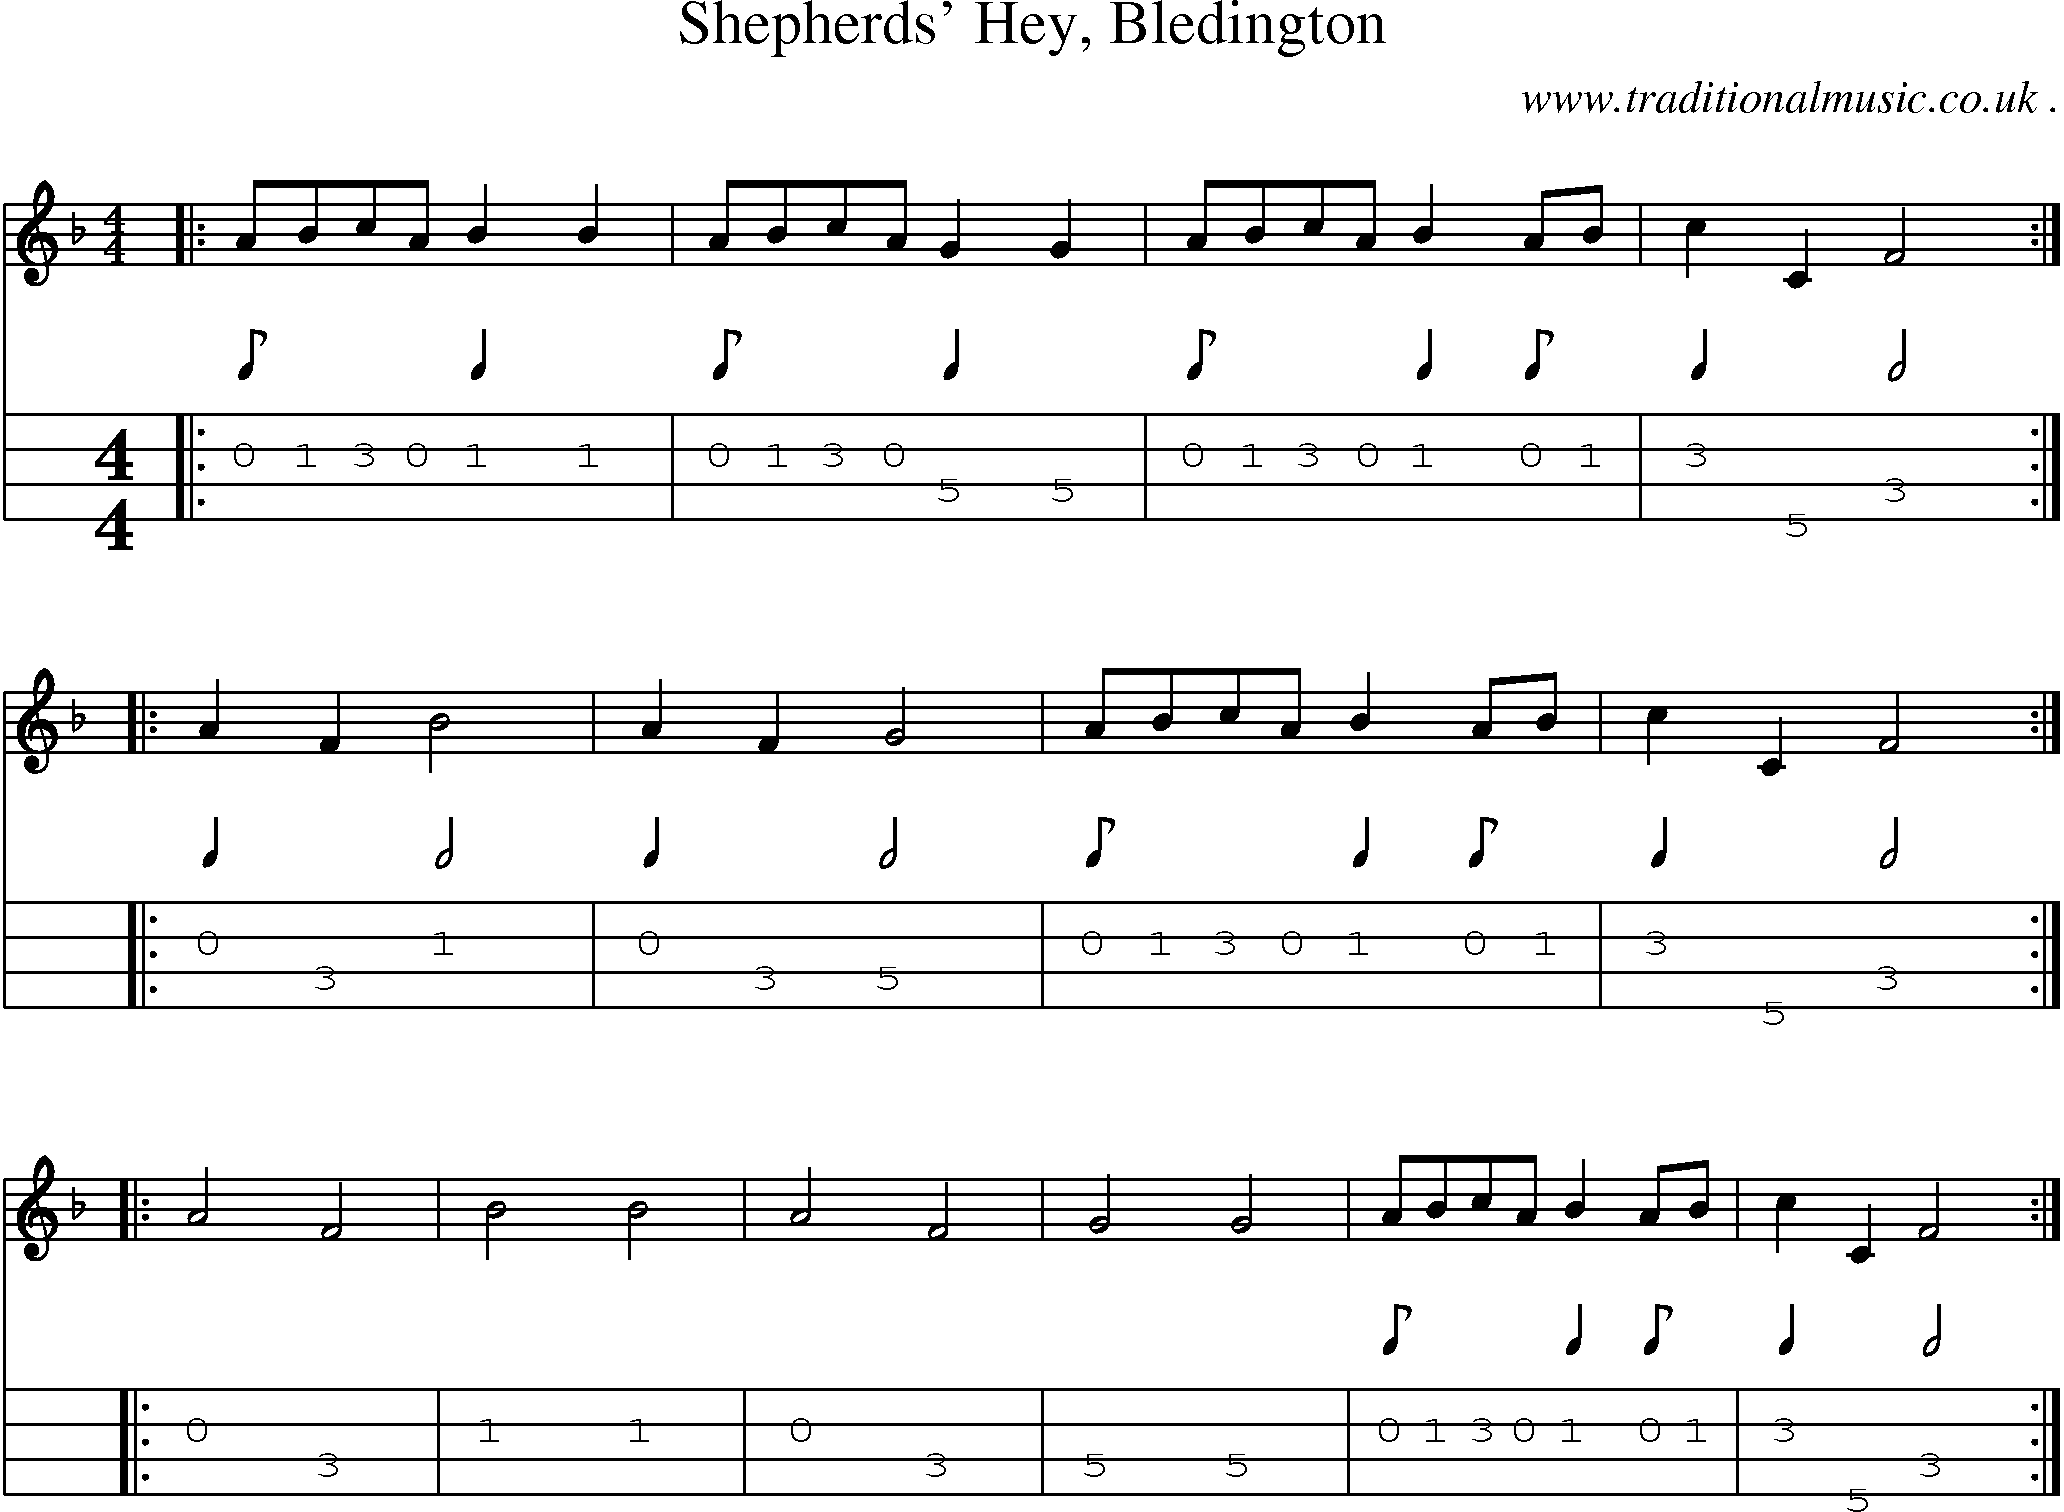 Sheet-Music and Mandolin Tabs for Shepherds Hey Bledington